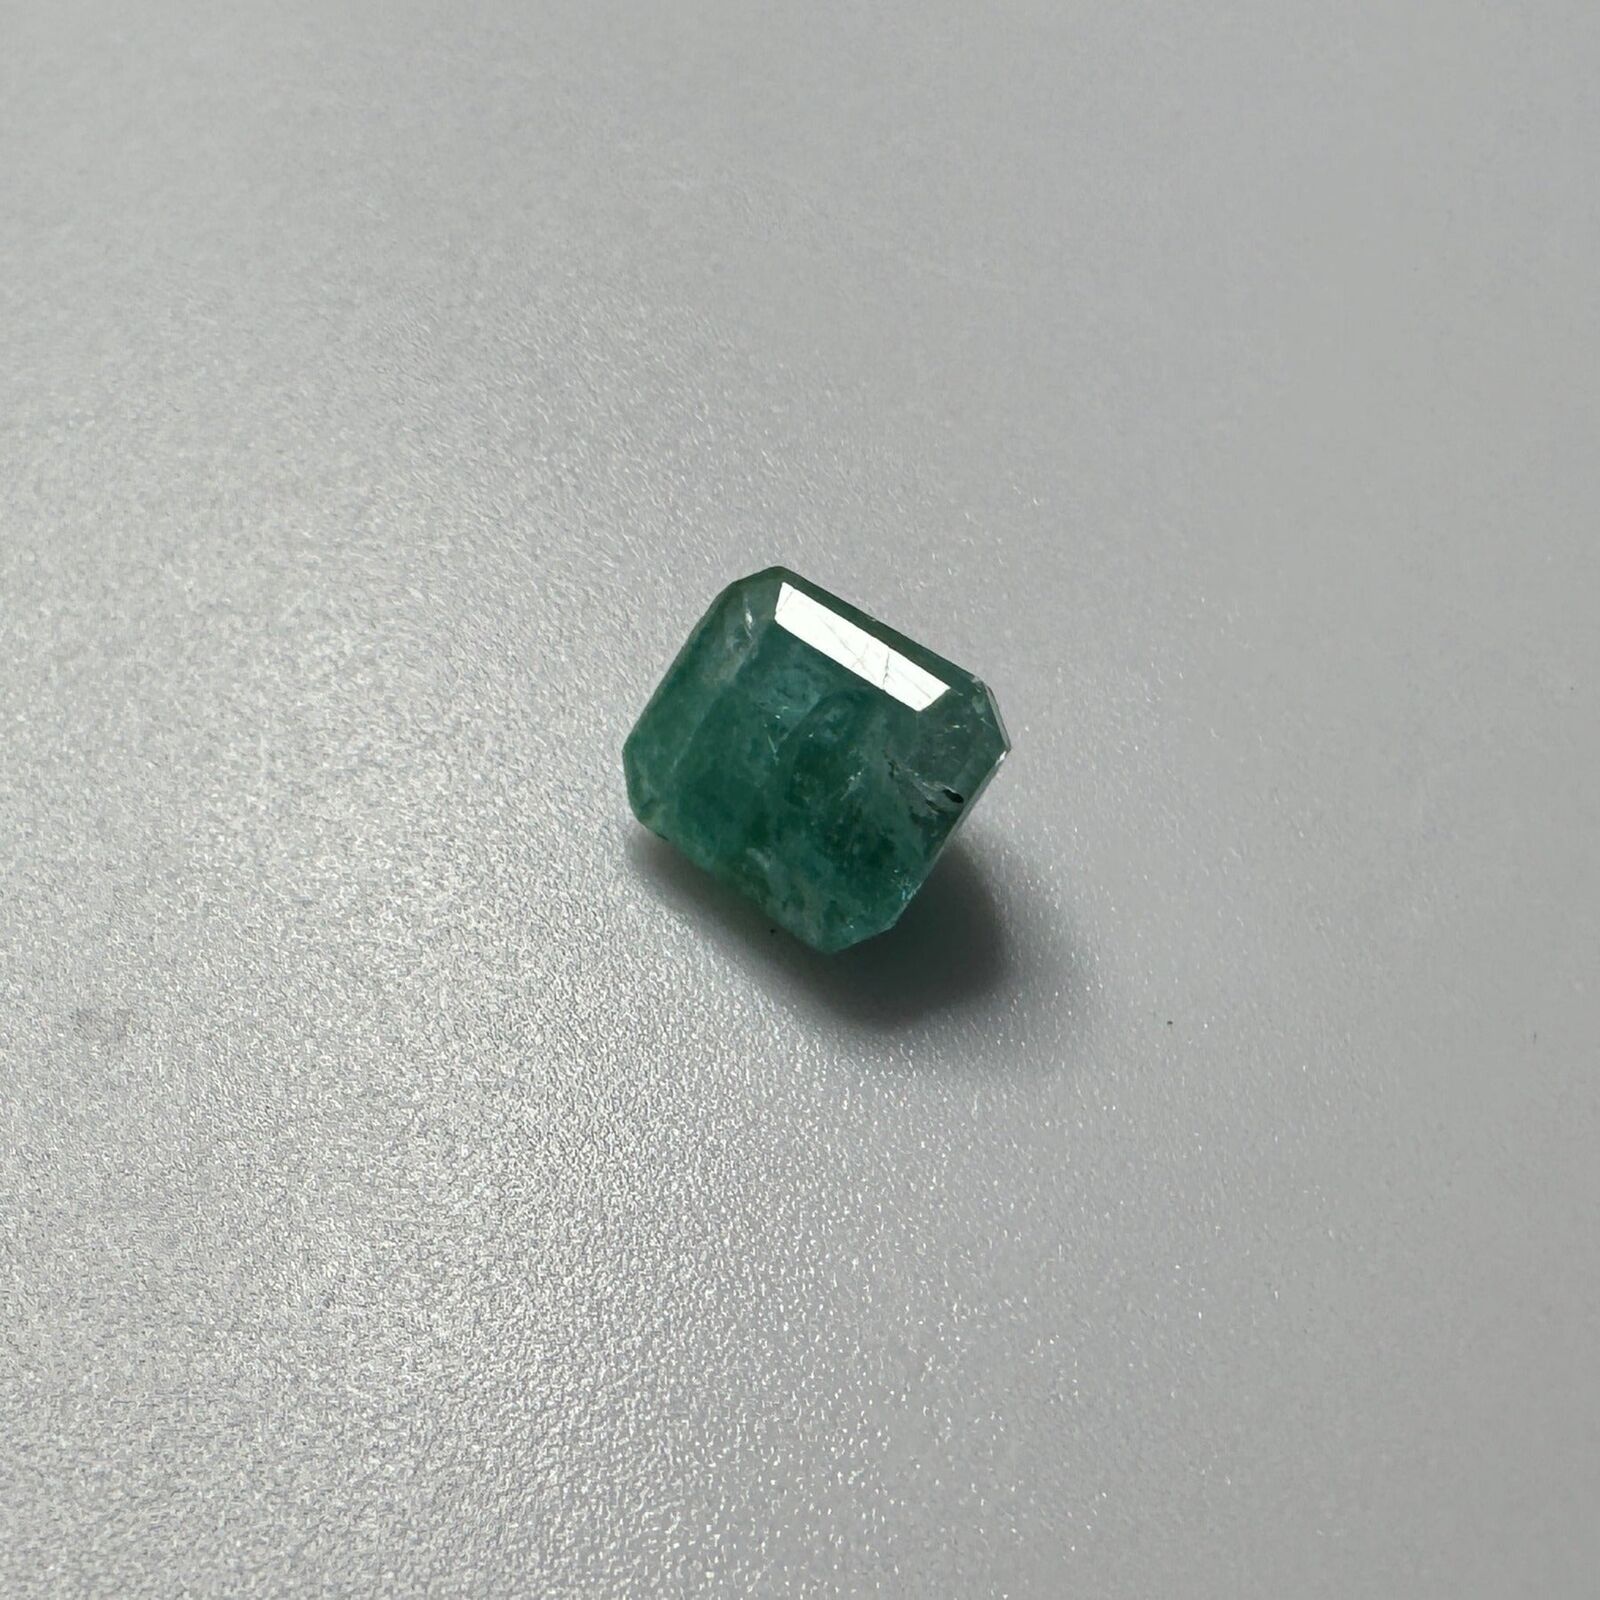 Utterly Unique Zambian Emerald Gemstone